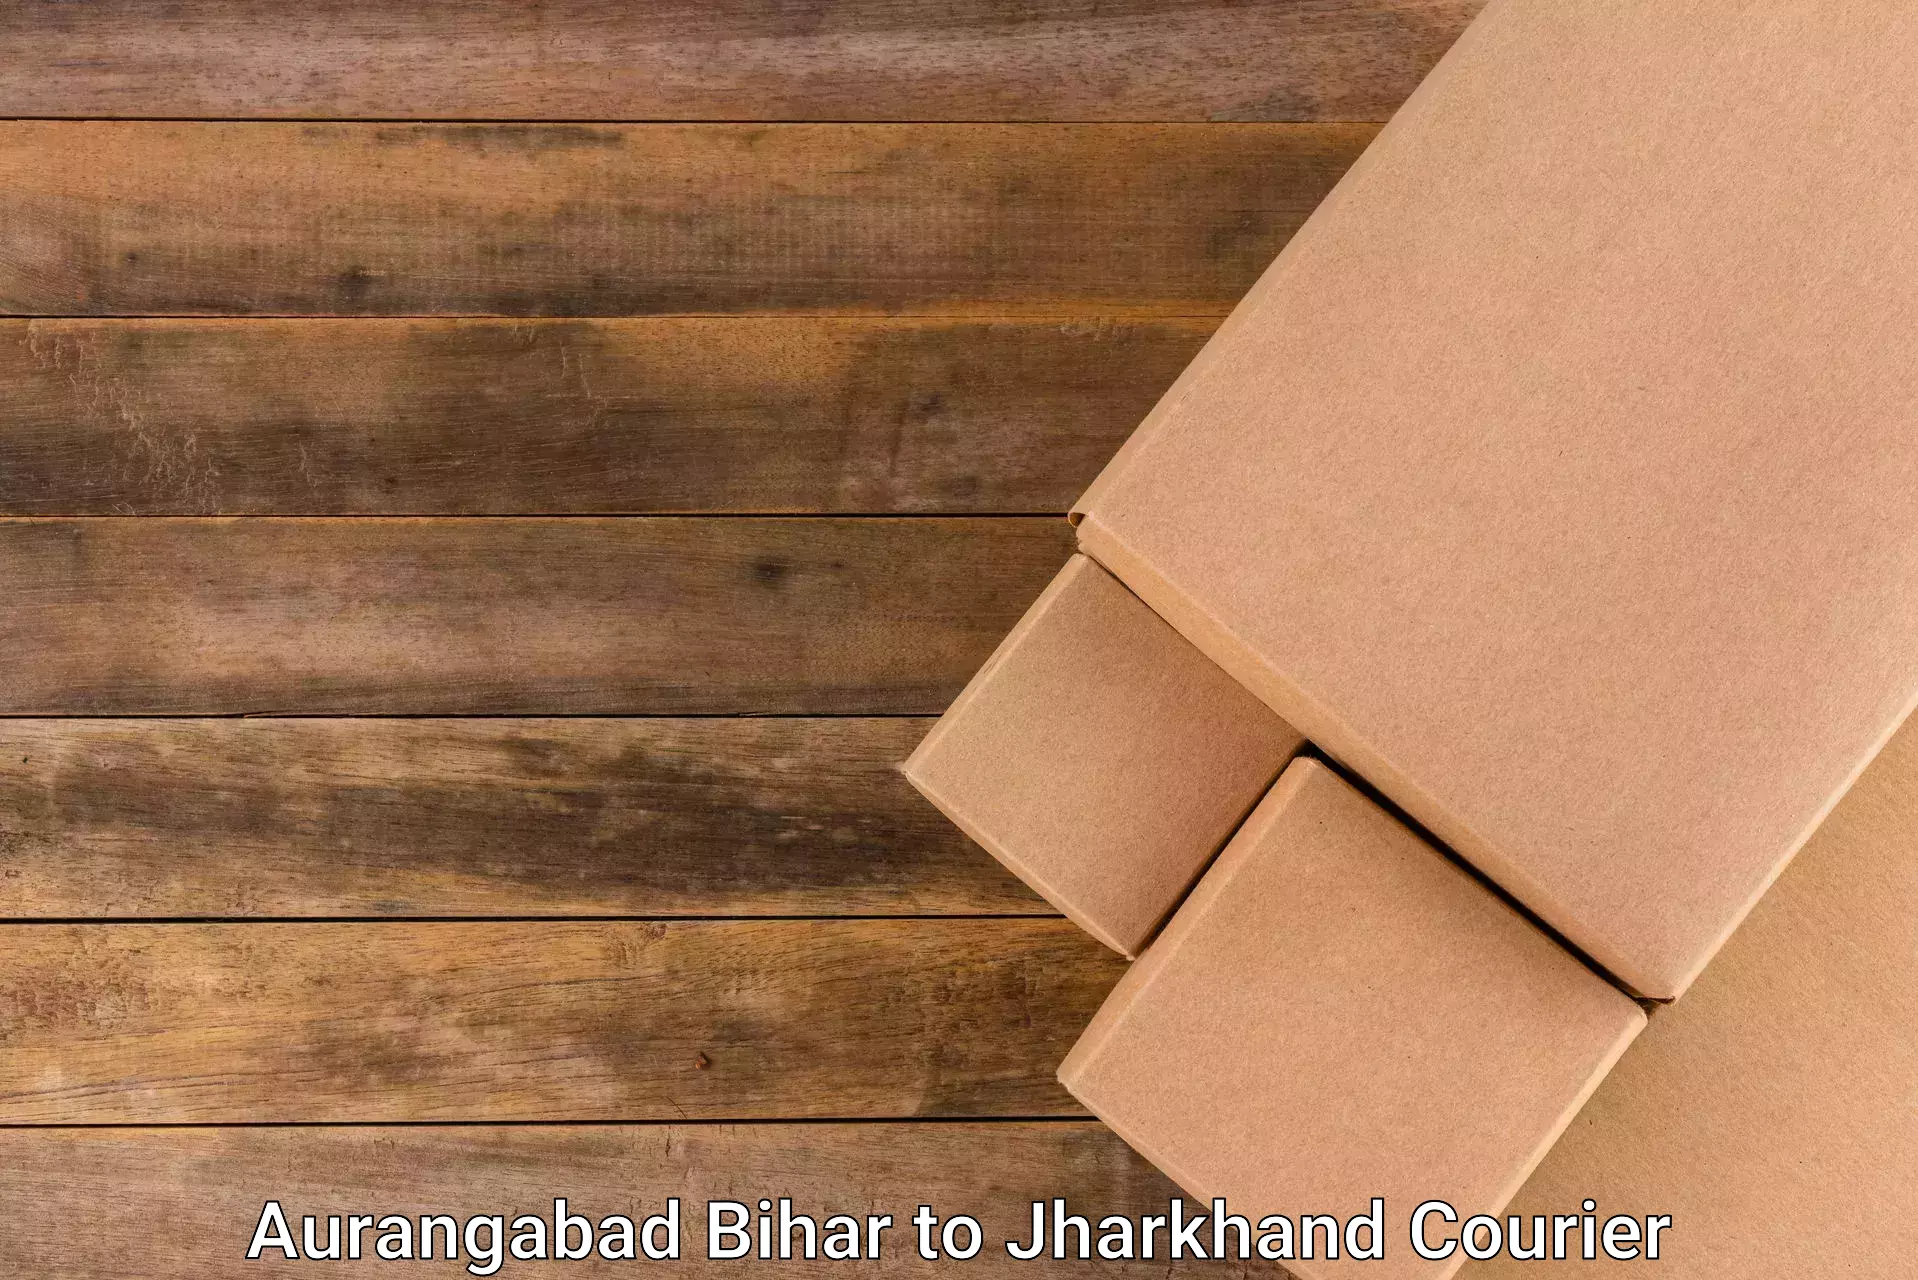 Quality courier partnerships in Aurangabad Bihar to Jharkhand